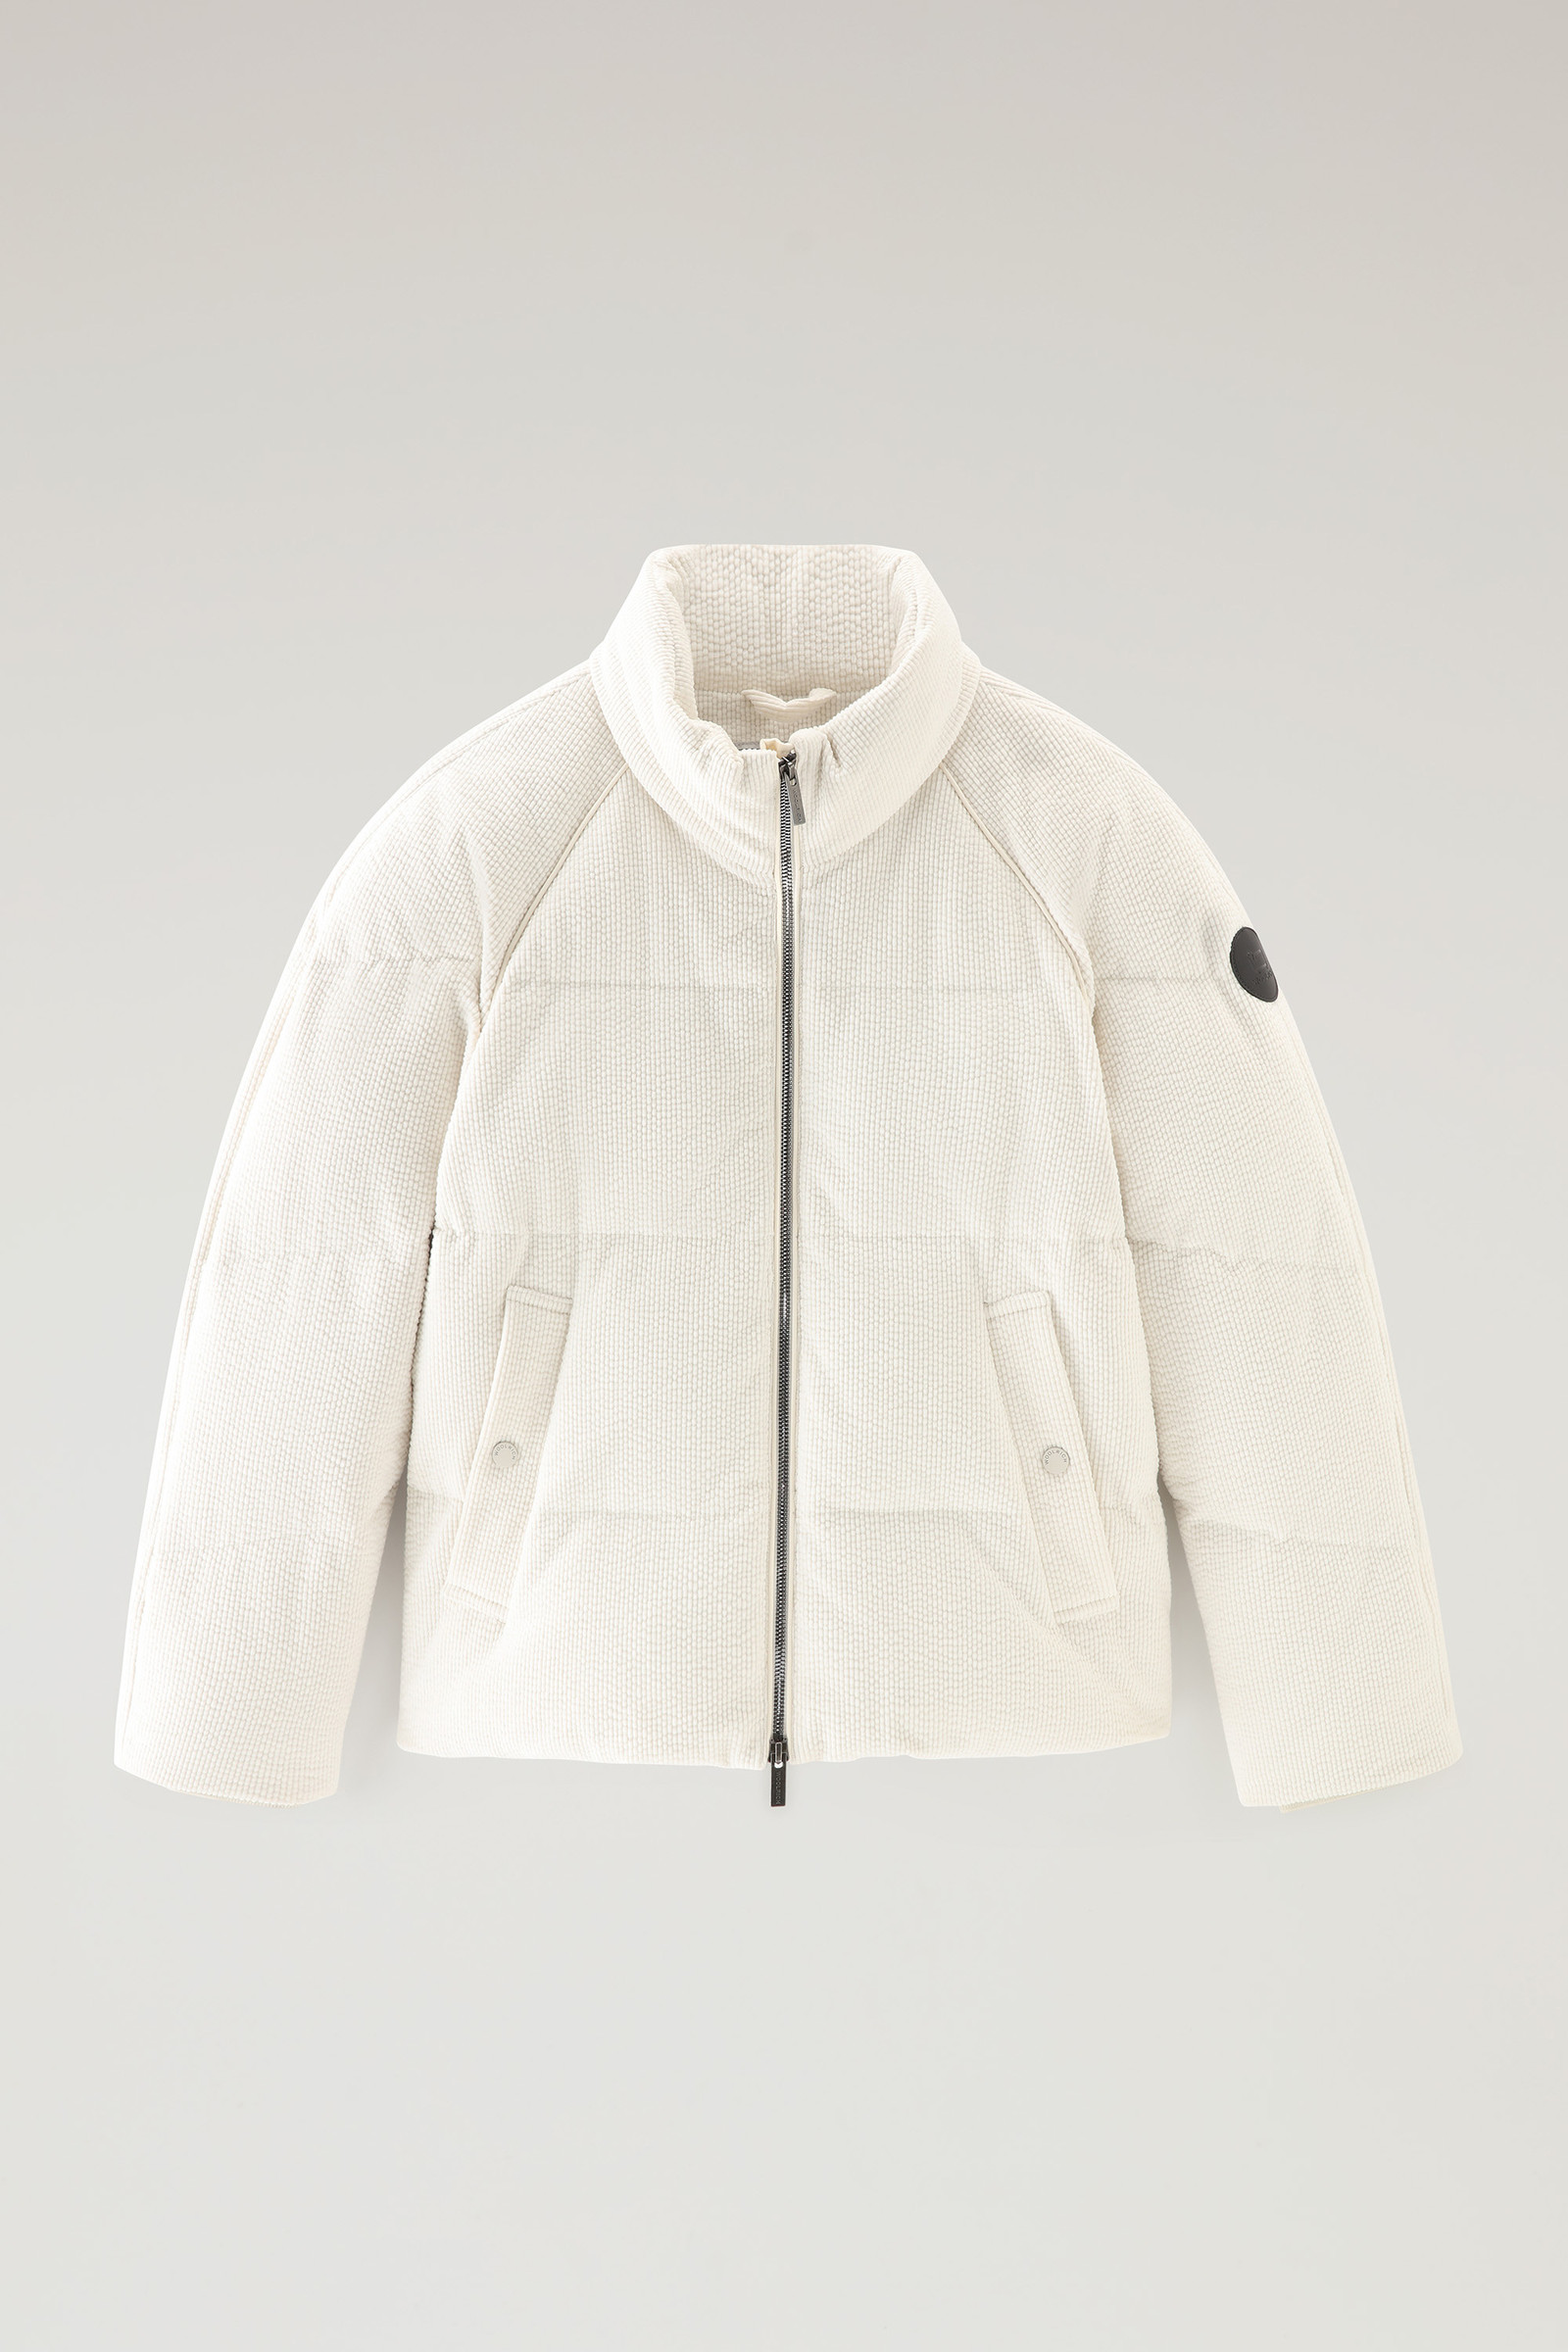 GenesinlifeShops Sweden - hardcore aviator jacket - White needles x  baracuta g9 printed corduroy jacket brcps Woolrich